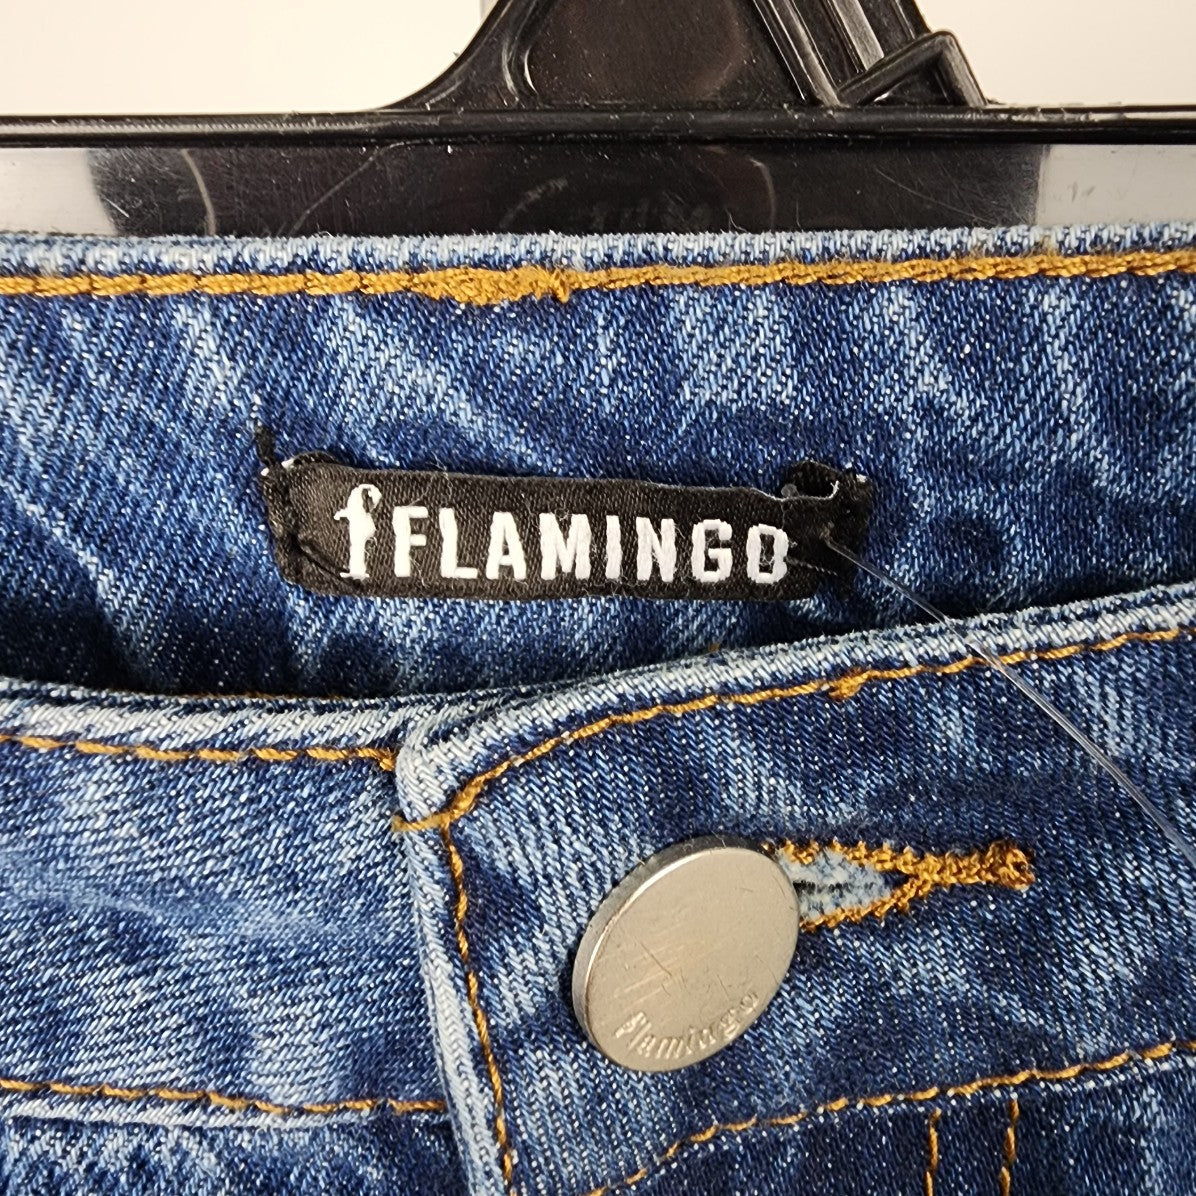 Flamingo Distressed Straight Leg Jeans Size 2-3X